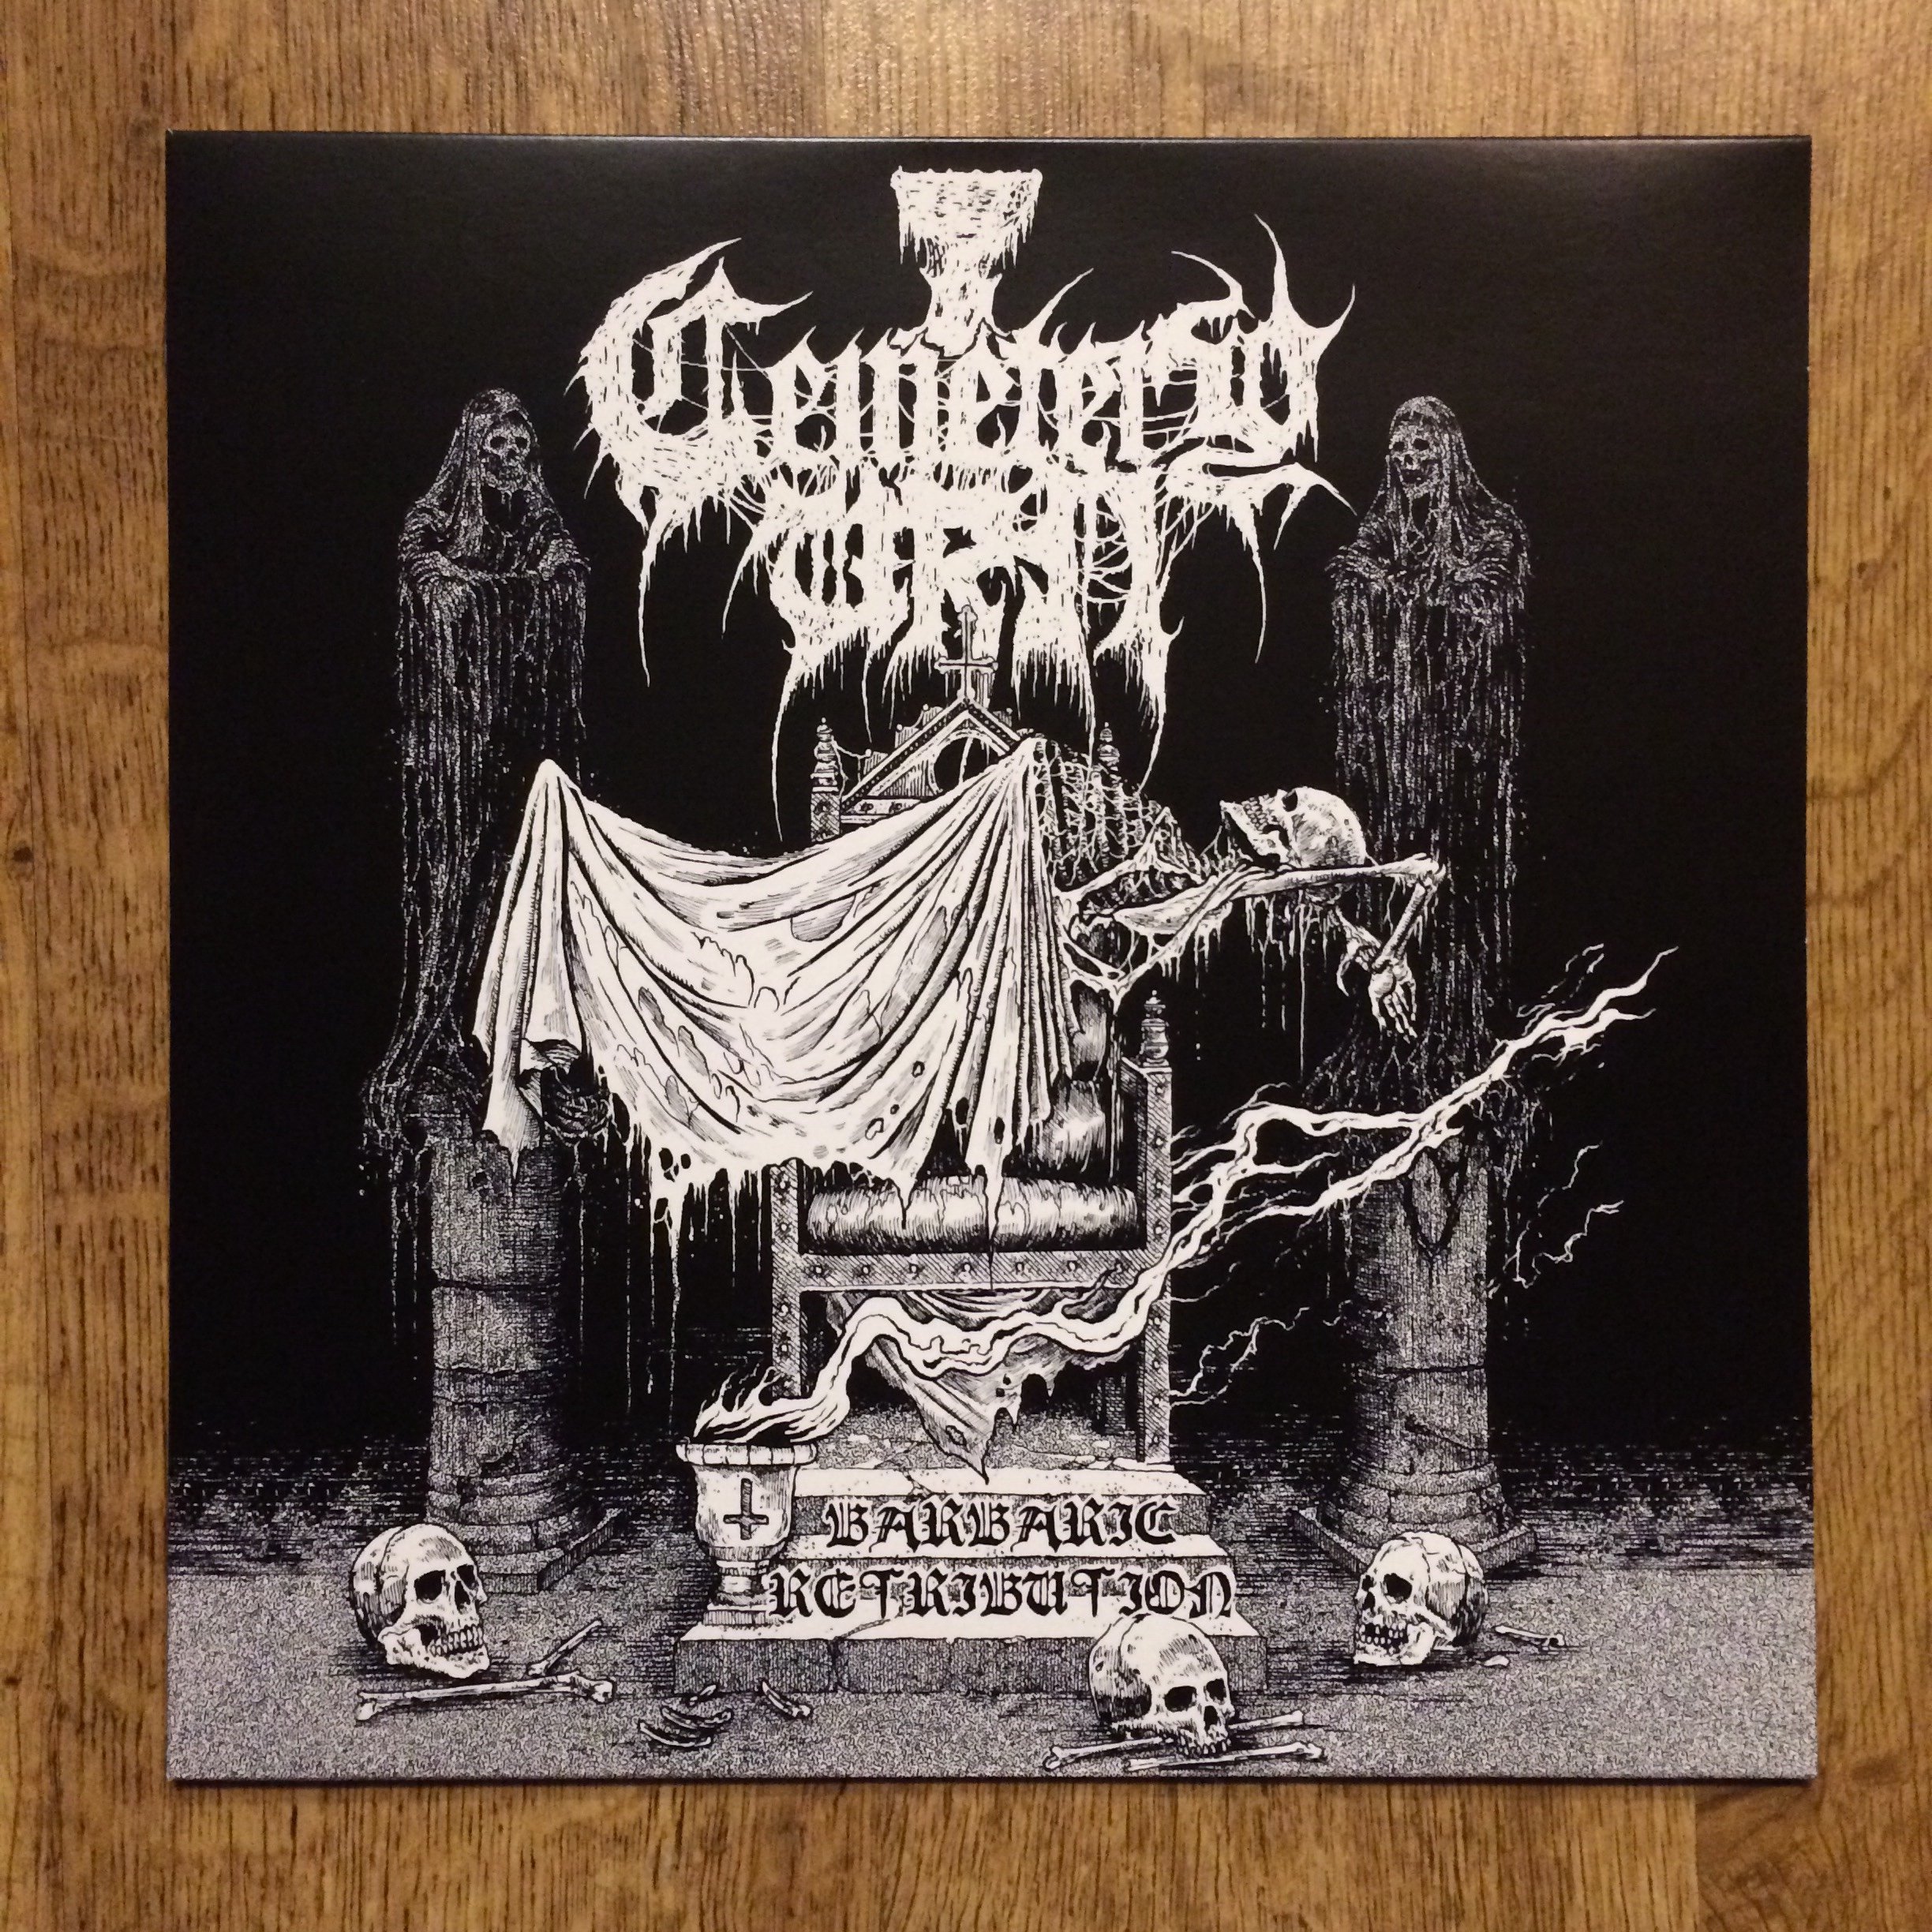 Photo of the Cemetery Urn - "Barbaric Retribution" LP (Black vinyl)